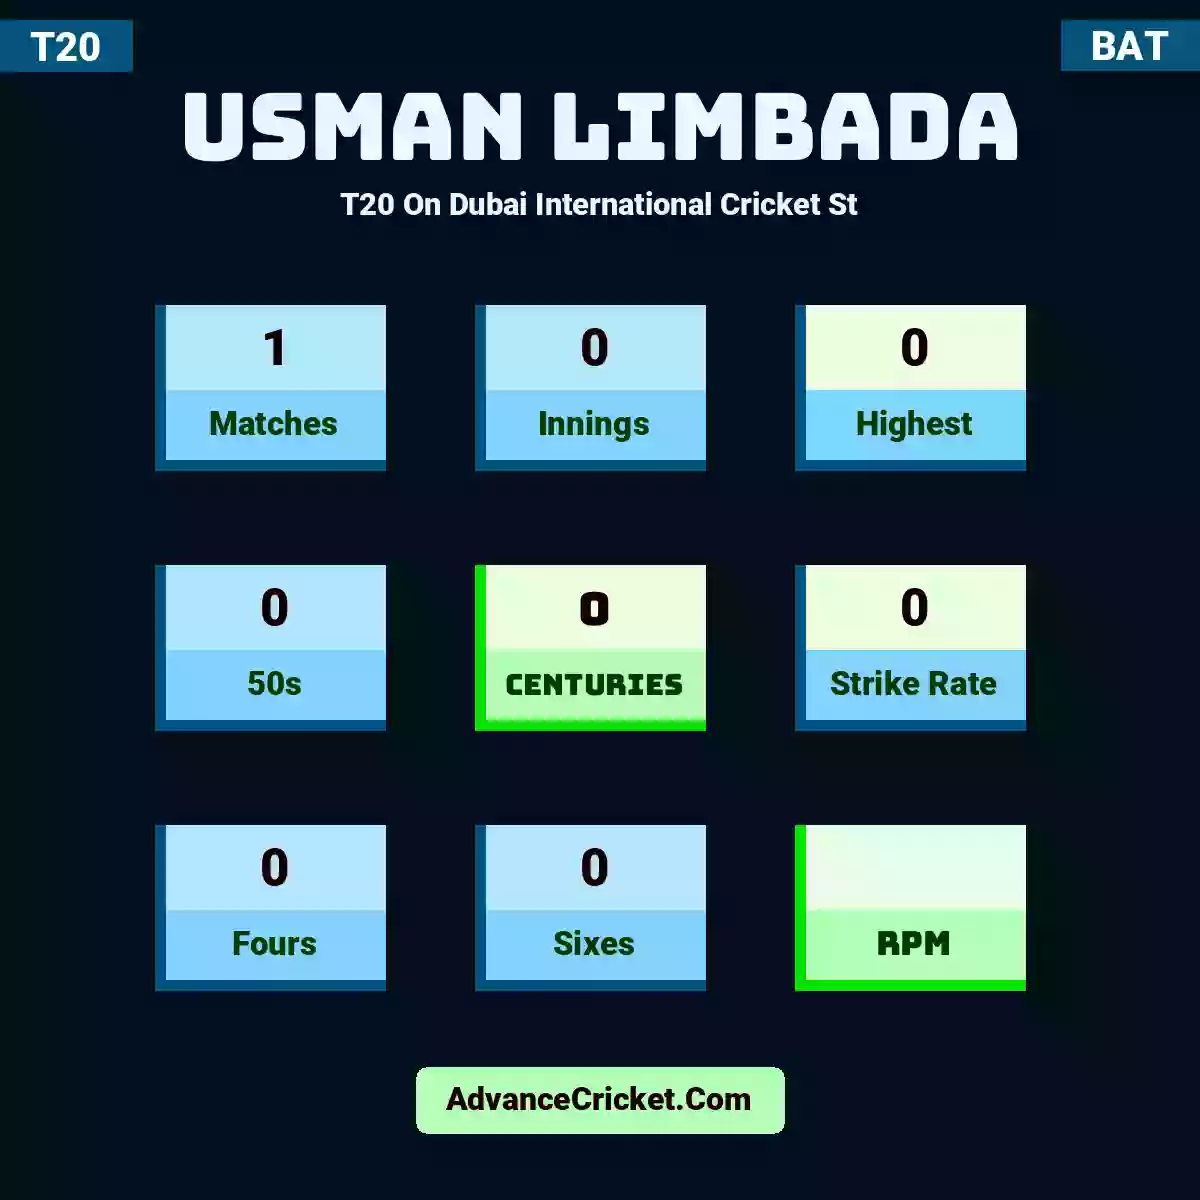 Usman Limbada T20  On Dubai International Cricket St, Usman Limbada played 1 matches, scored 0 runs as highest, 0 half-centuries, and 0 centuries, with a strike rate of 0. U.Limbada hit 0 fours and 0 sixes.